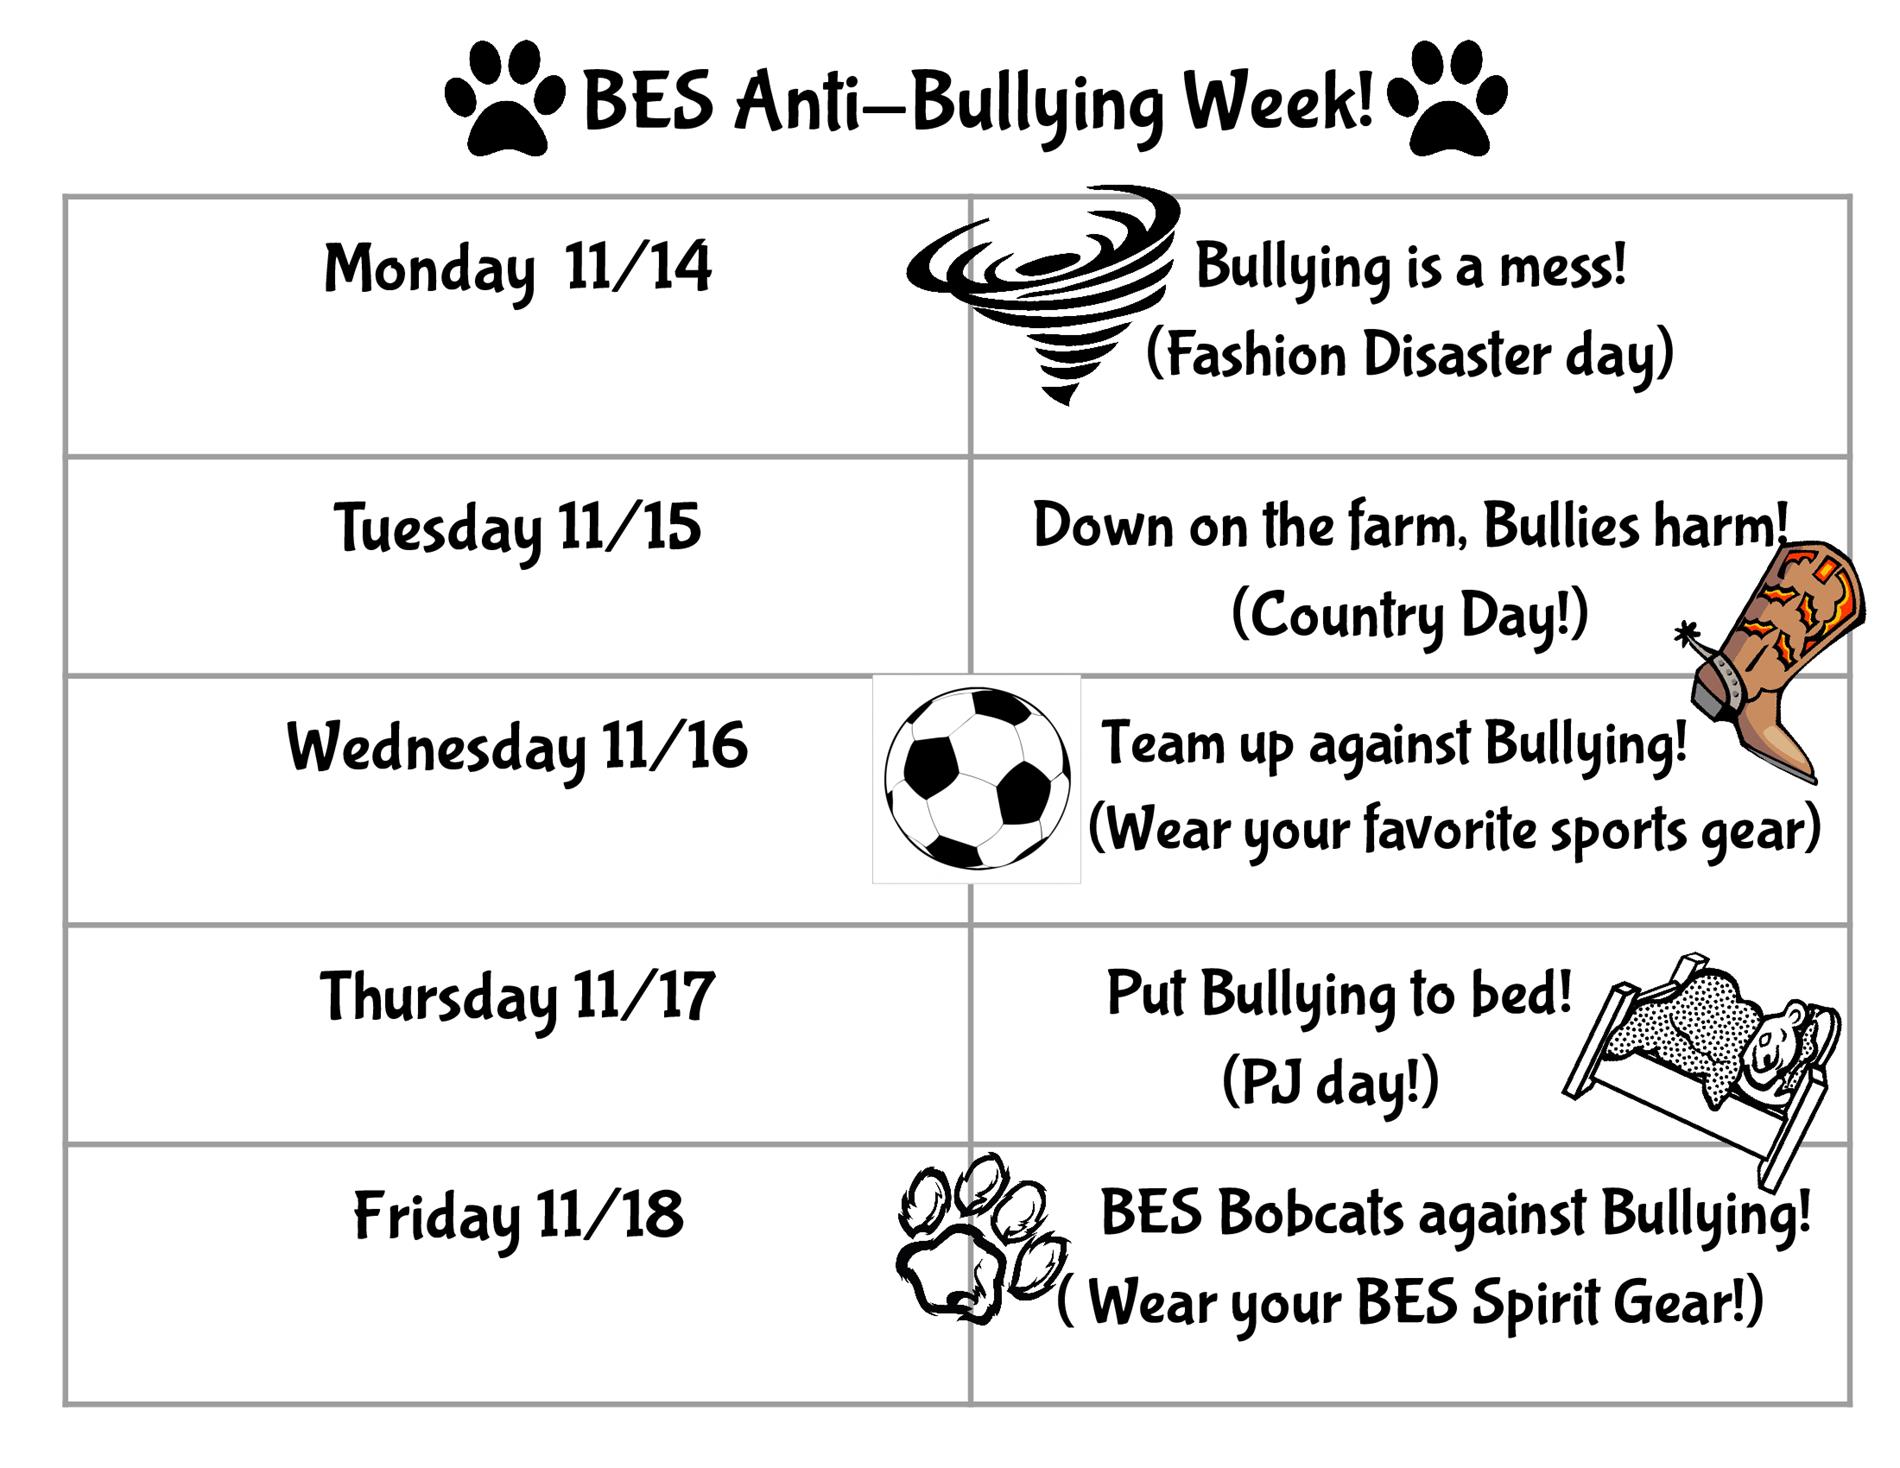 BES Anti-Bullying Week